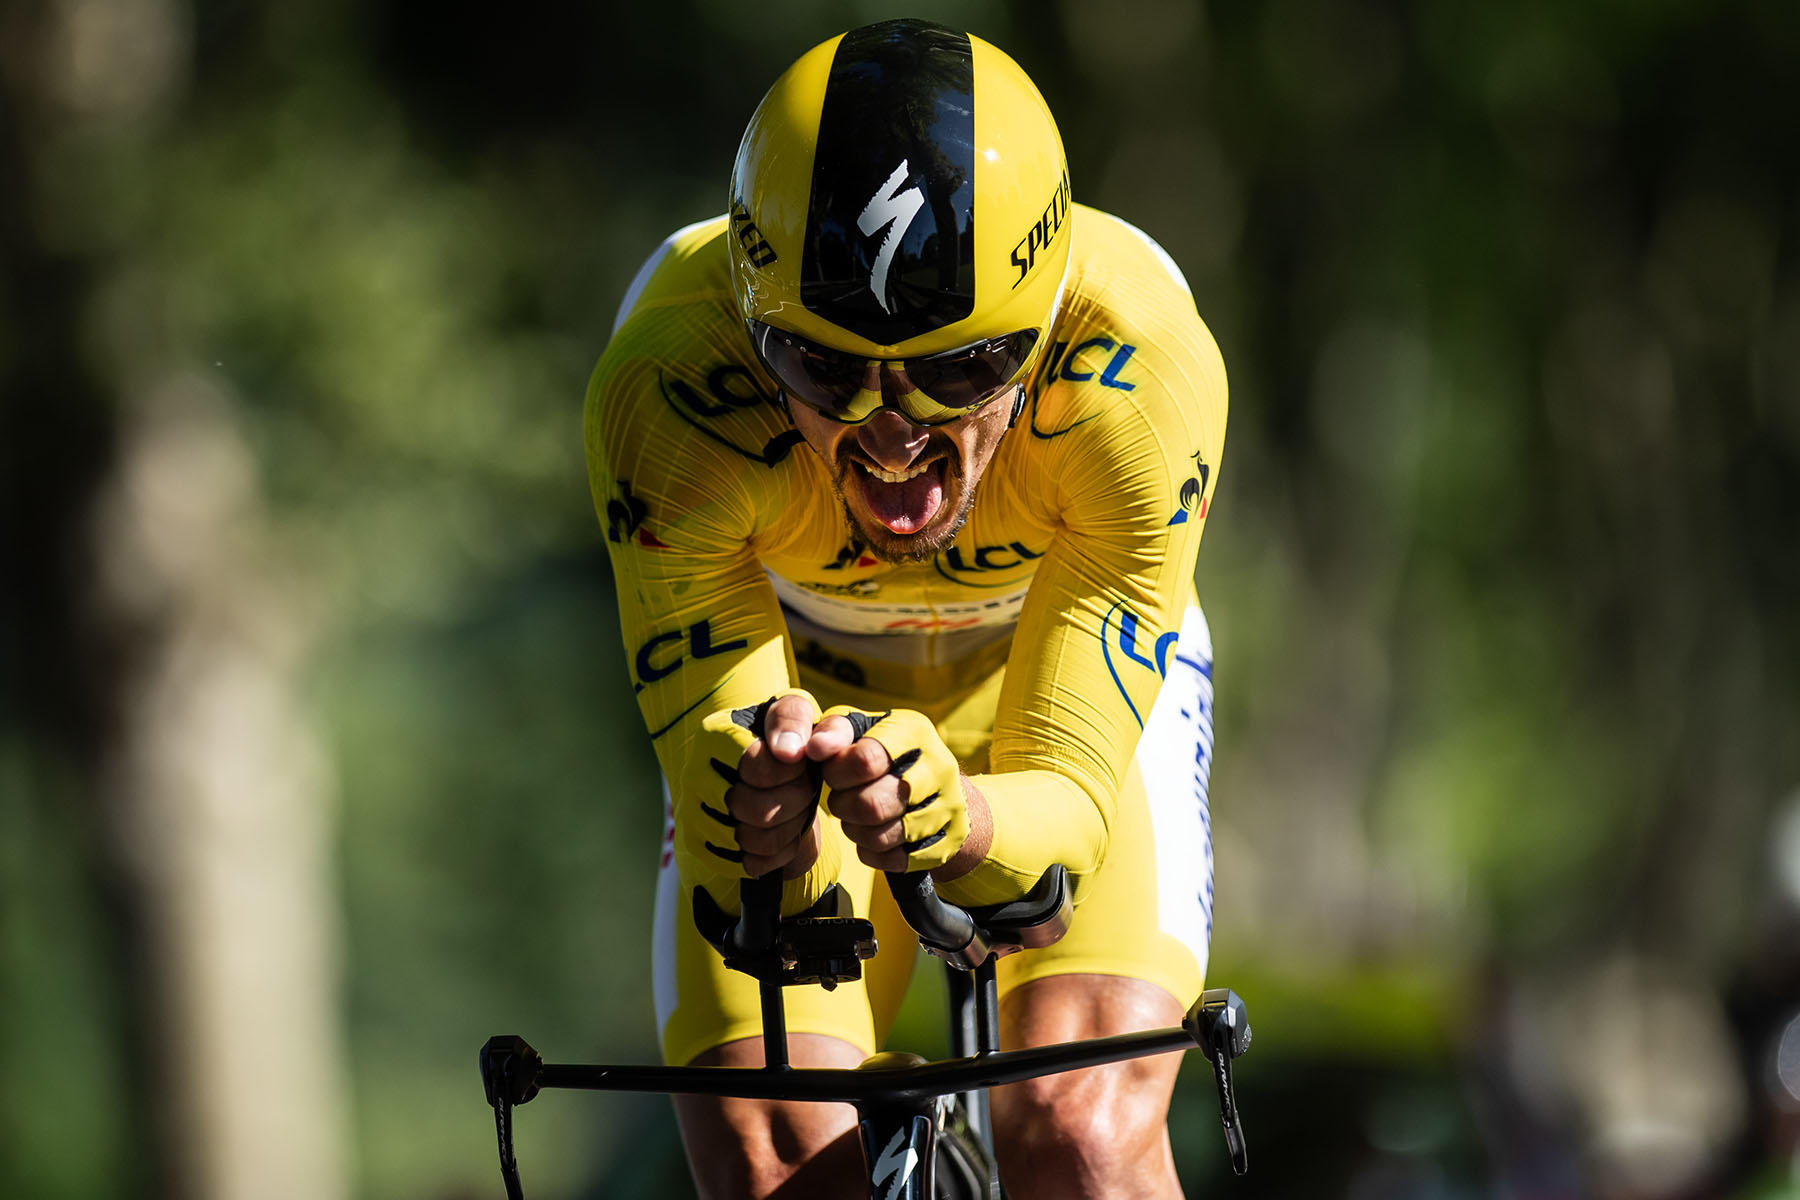 Tour de France 2019 - Stage Thirteen - Julian Alaphilippe rides during the ITT